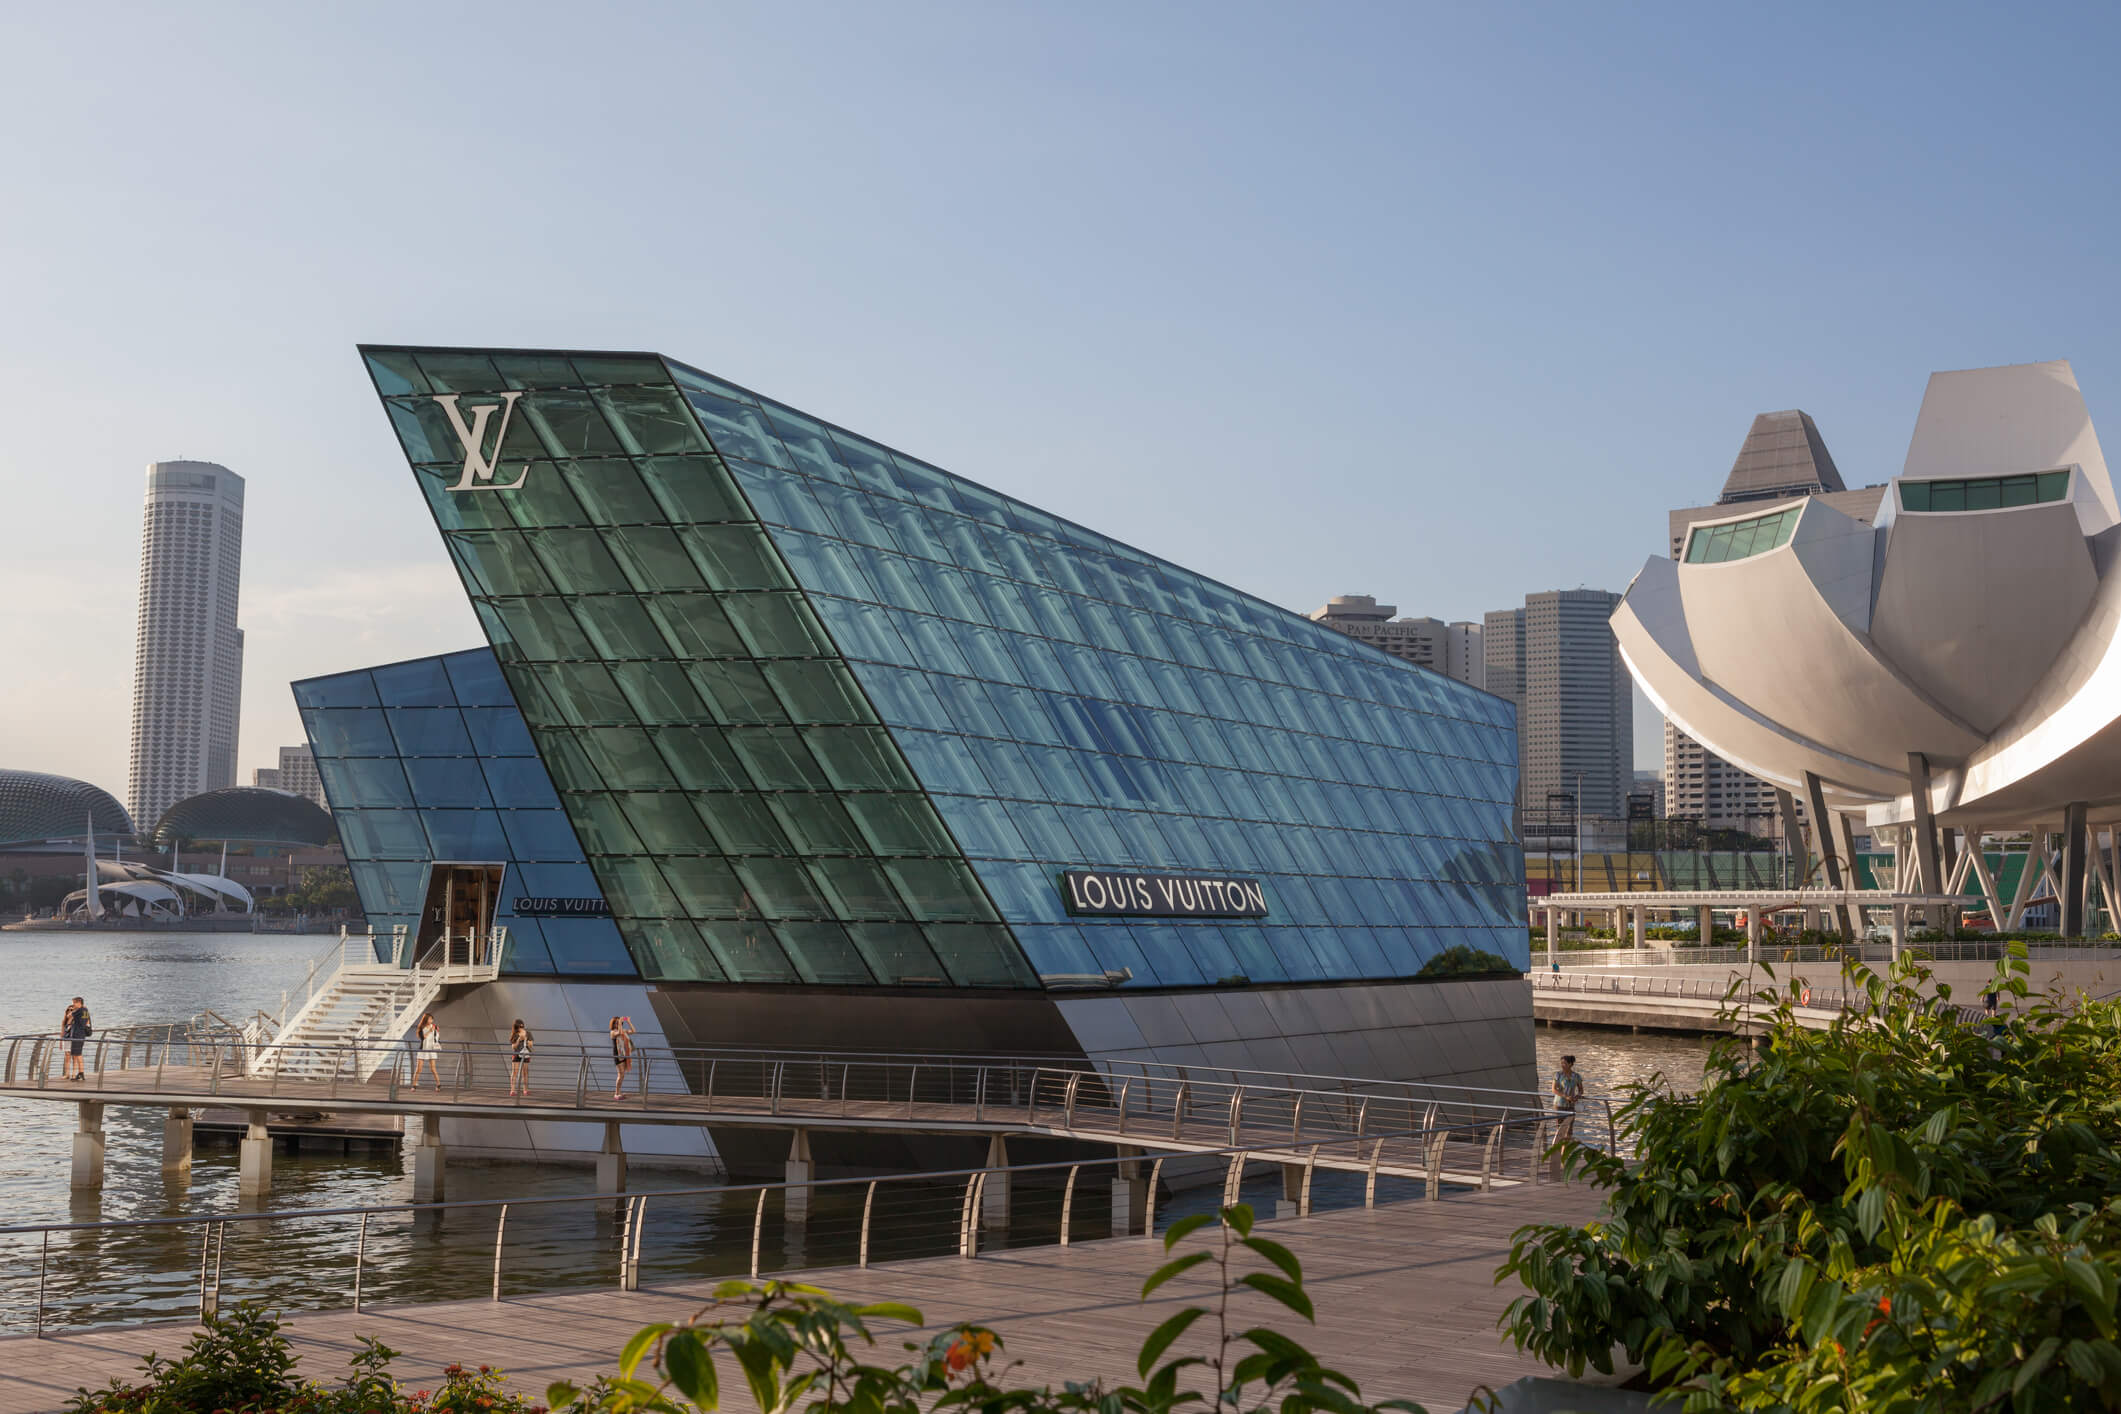 Louis Vuitton Singapore Marina Bay / April 2014 on Behance